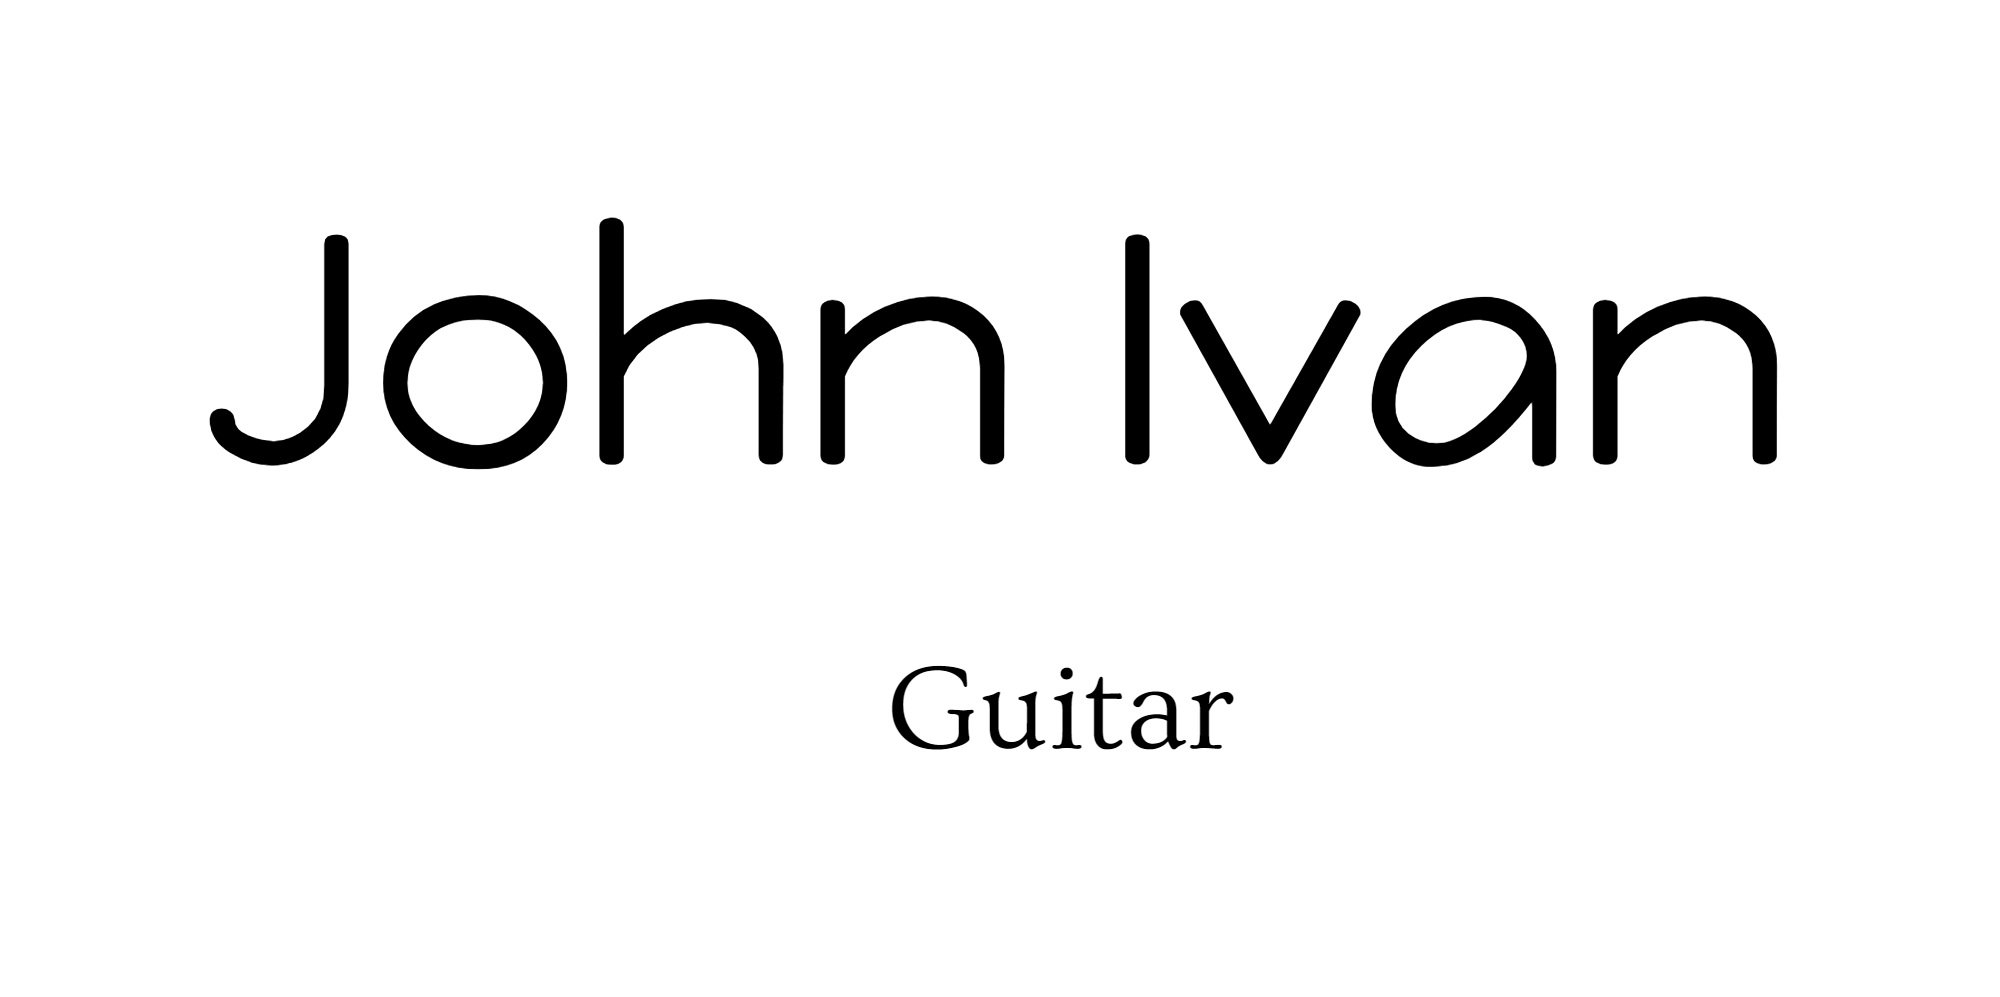 John Ivan